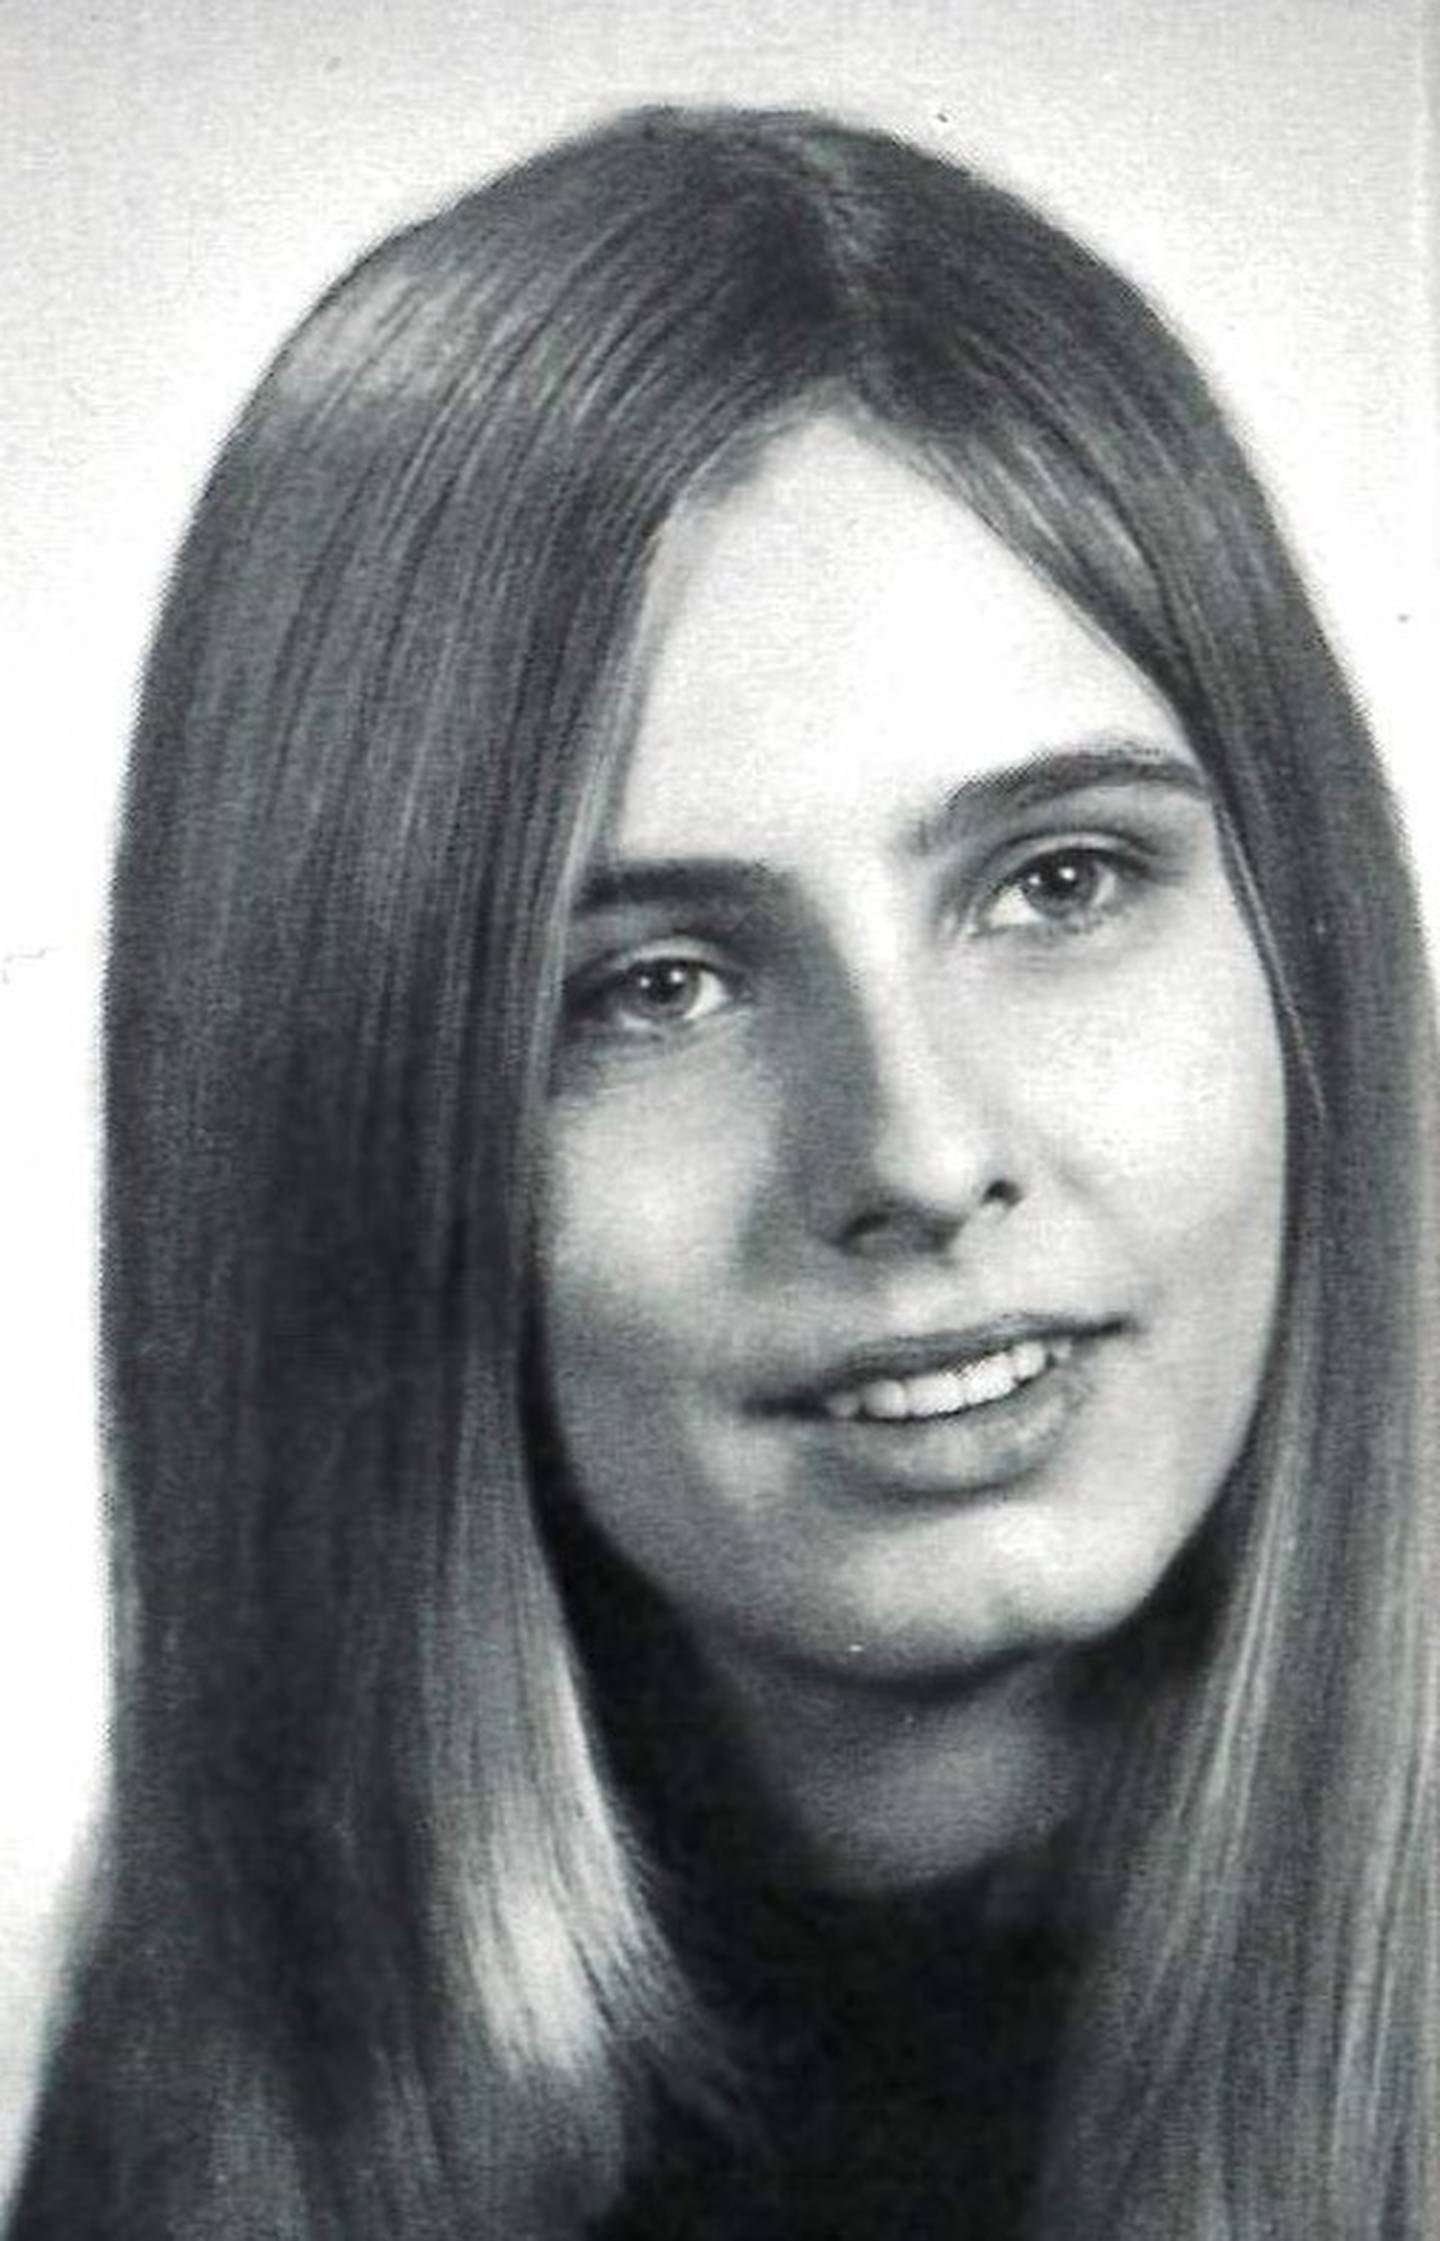 Gail (Cimaroli) Grabowski photo from the 1968 “IVEE” yearbook